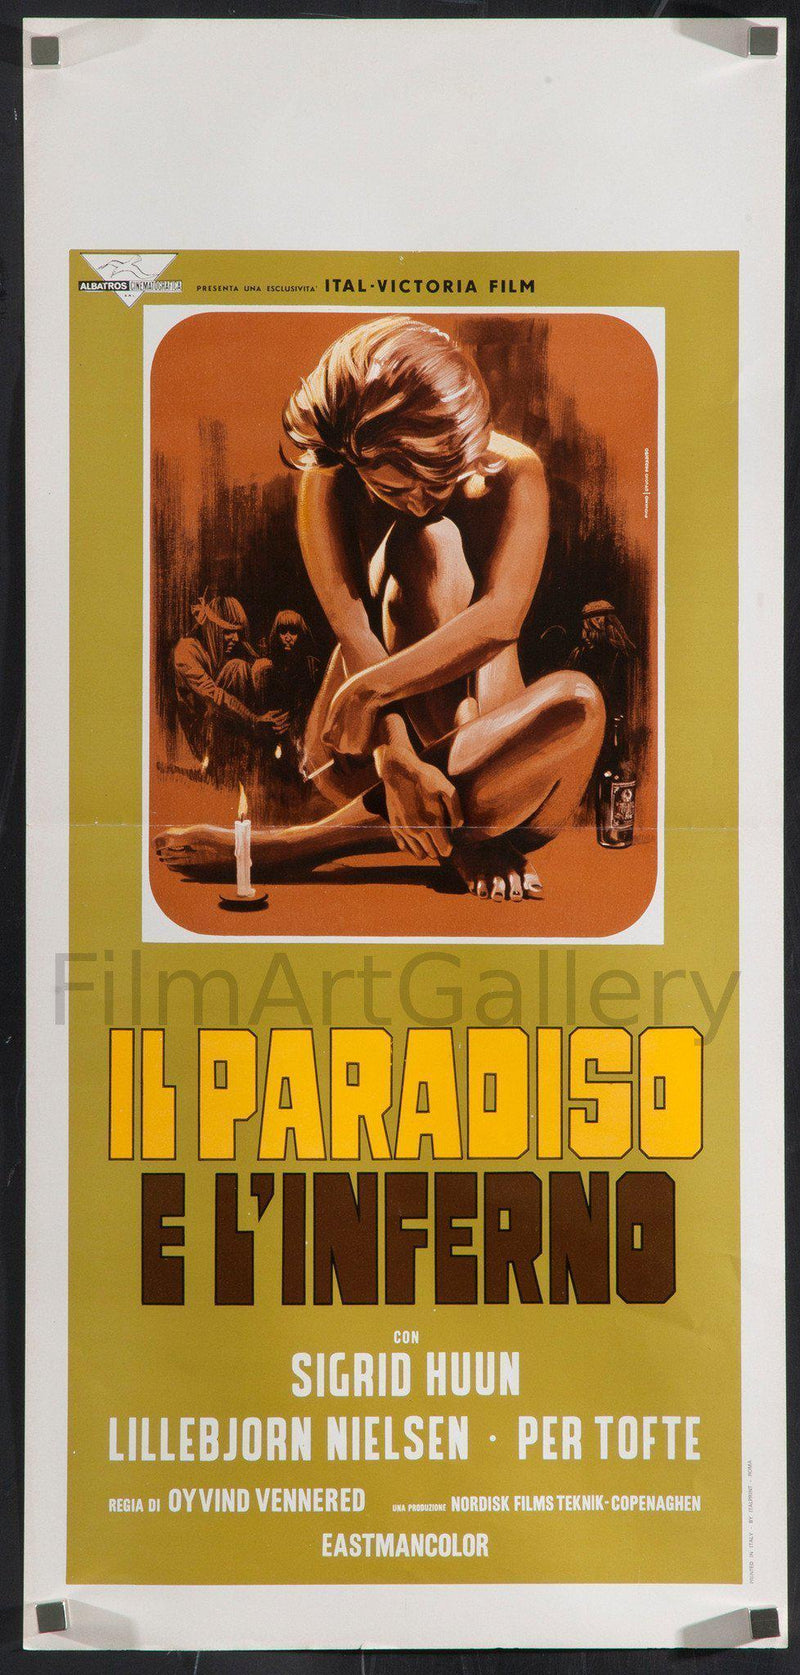 Heaven and Hell Italian Locandina (13x28) Original Vintage Movie Poster